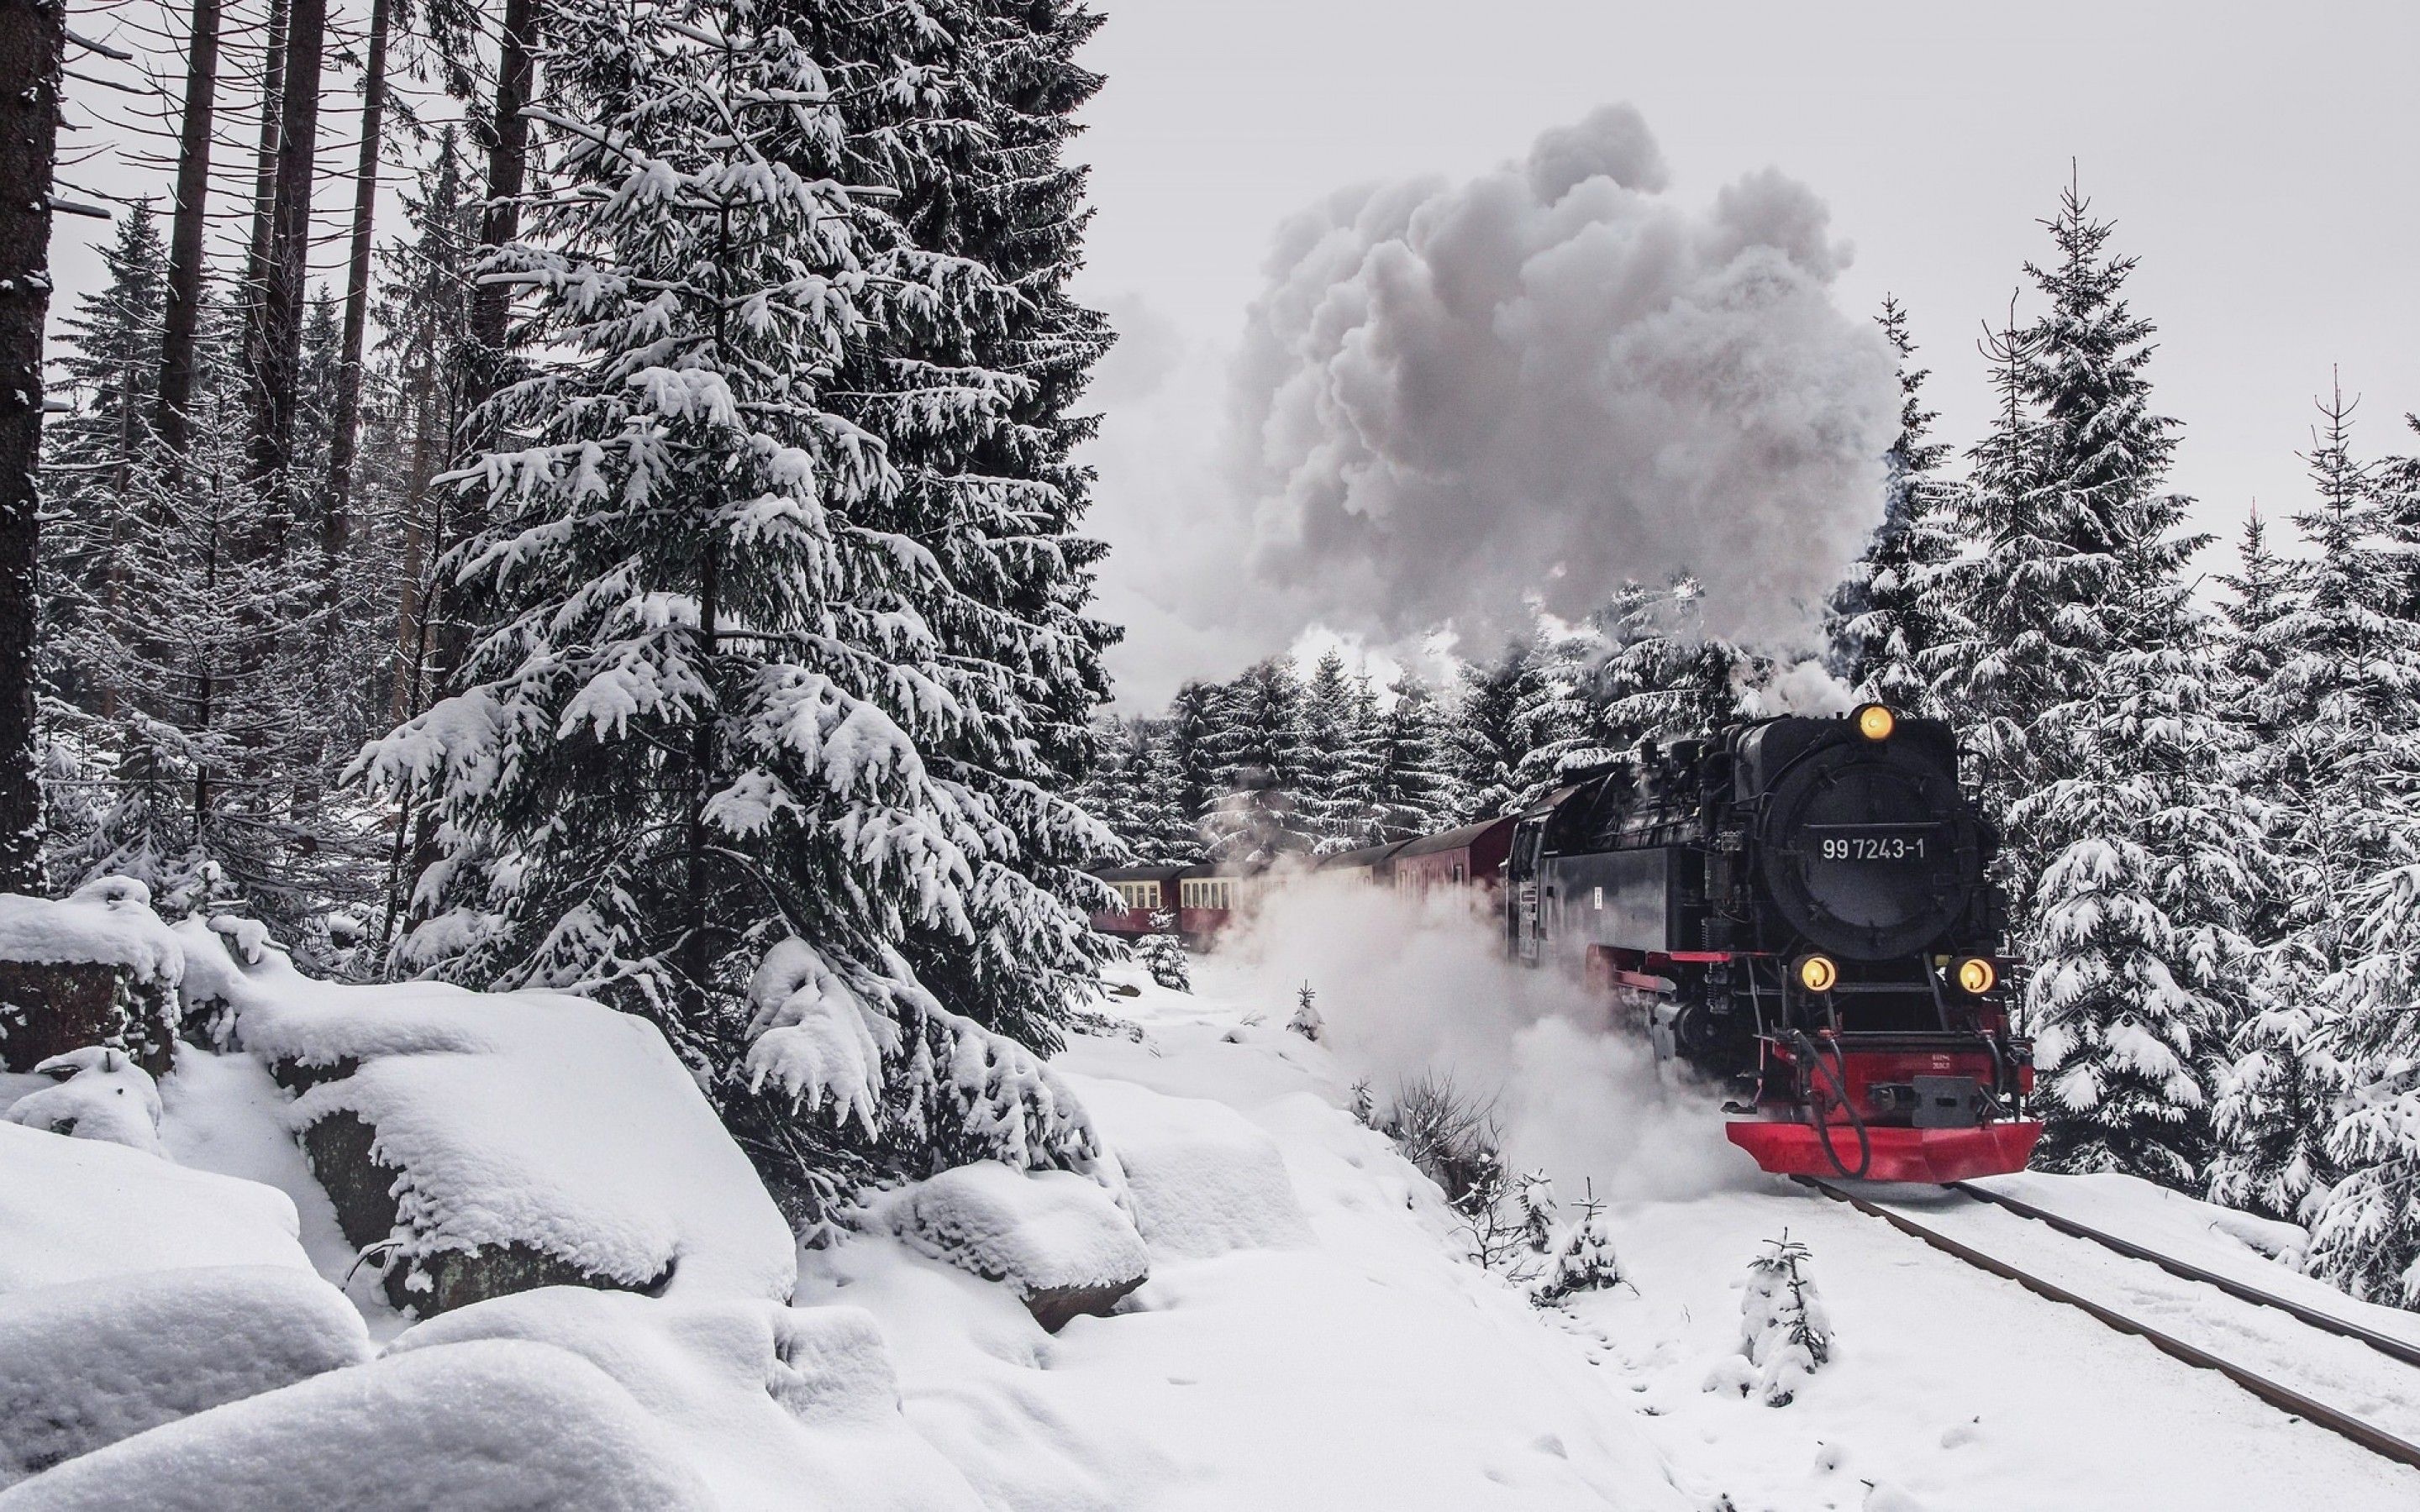 Download 2880x1800 Steam Train, Snow, Winter, Trees Wallpaper for MacBook Pro 15 inch